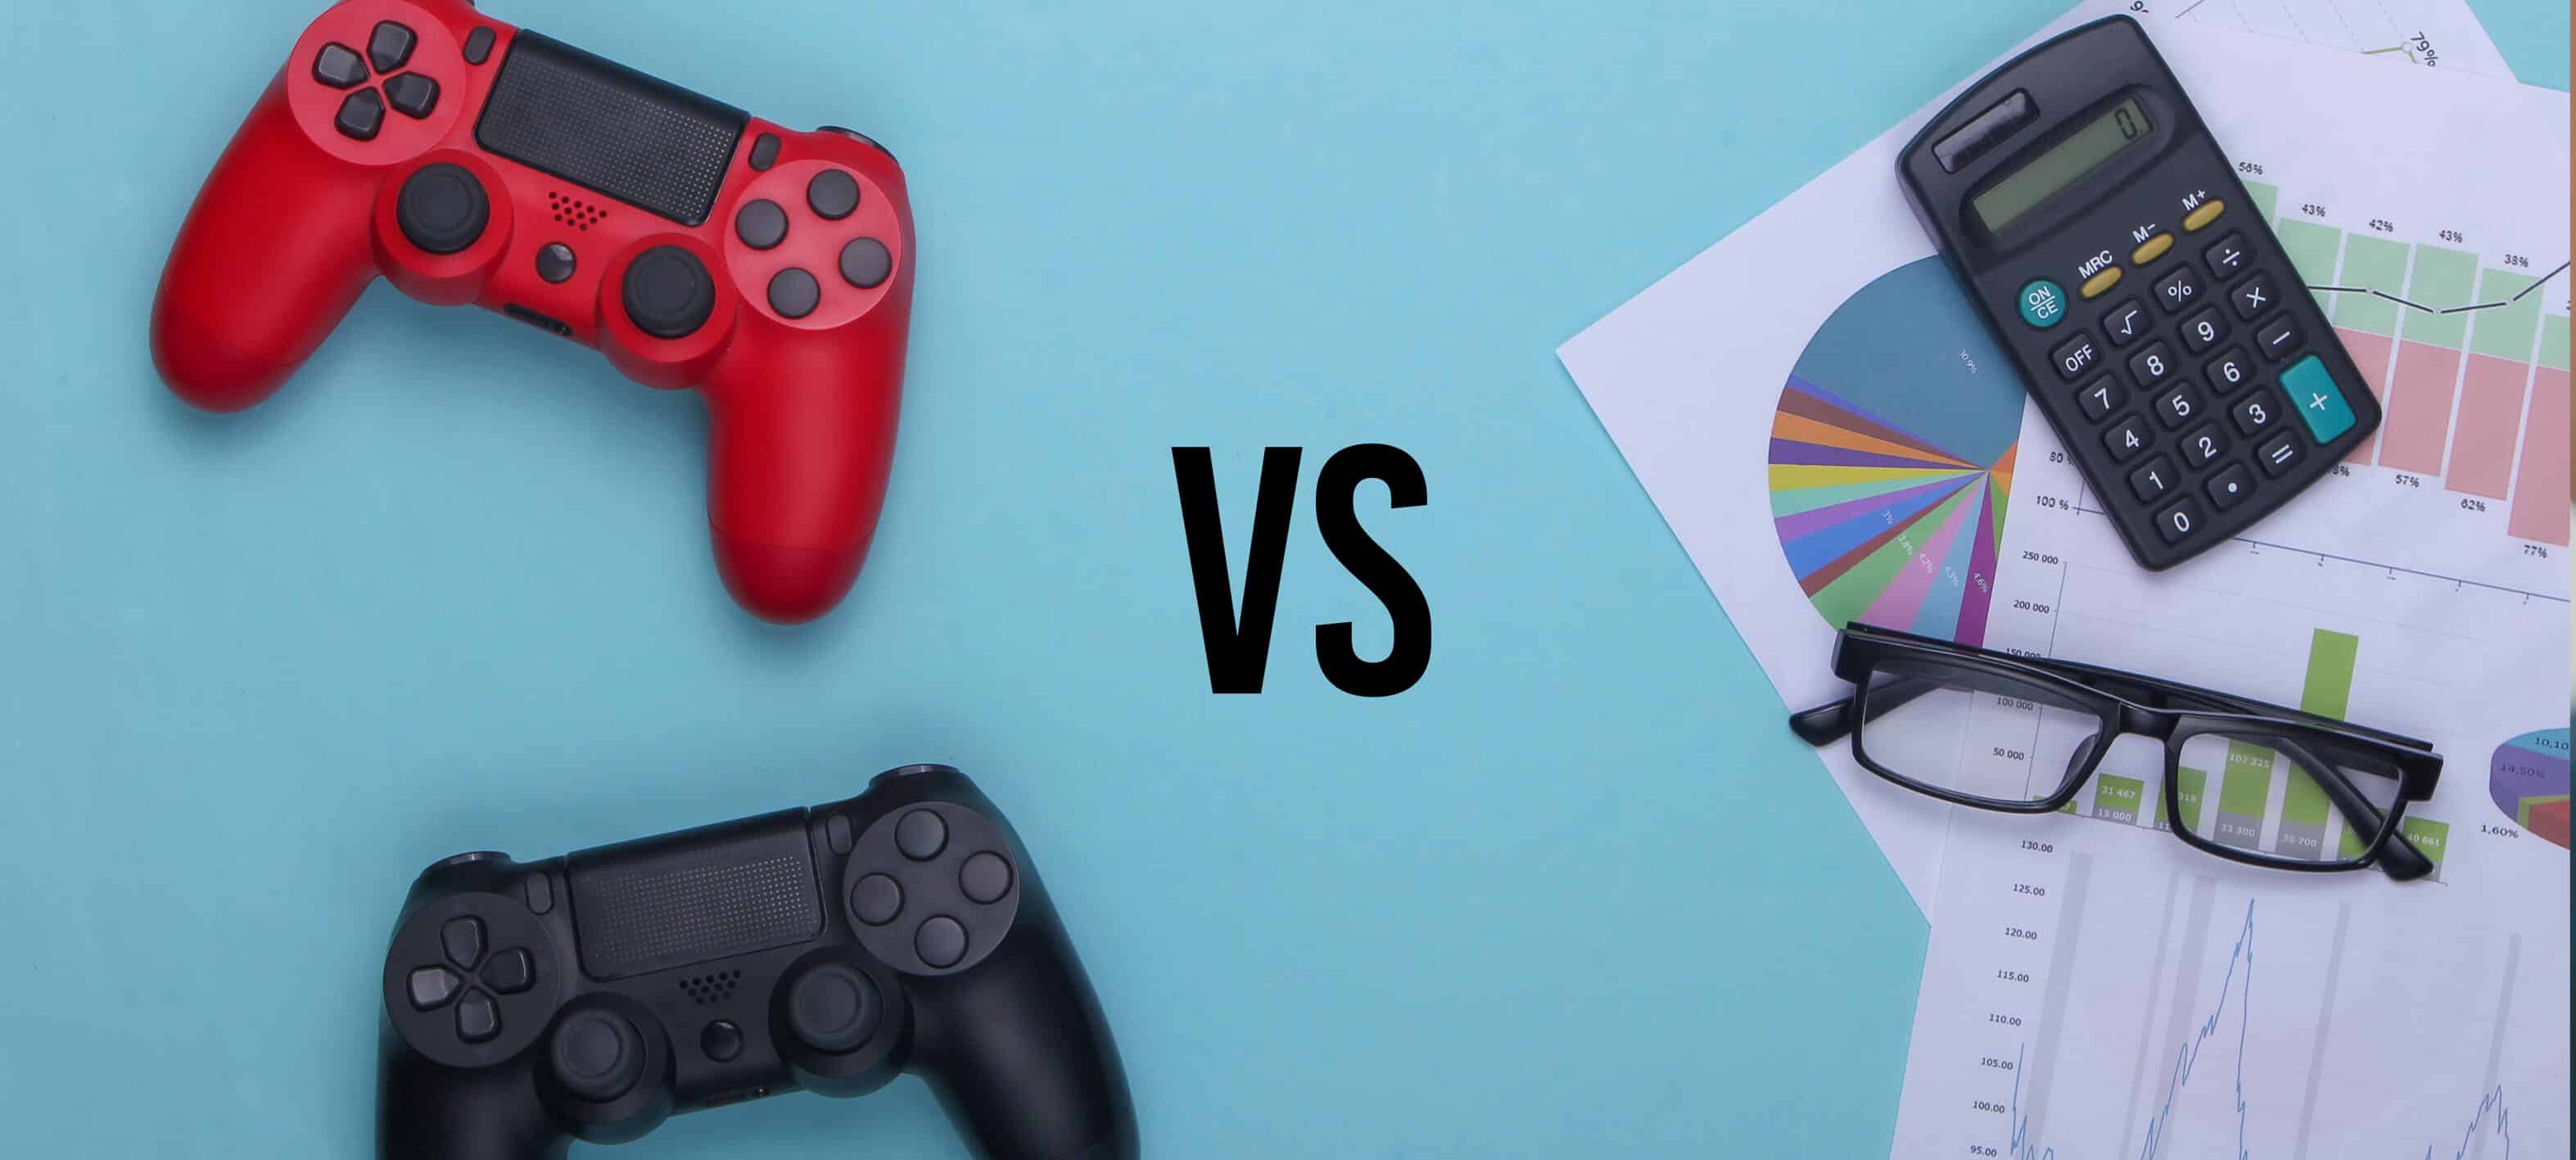 Mobile Games vs Console Games: A Detailed Comparison